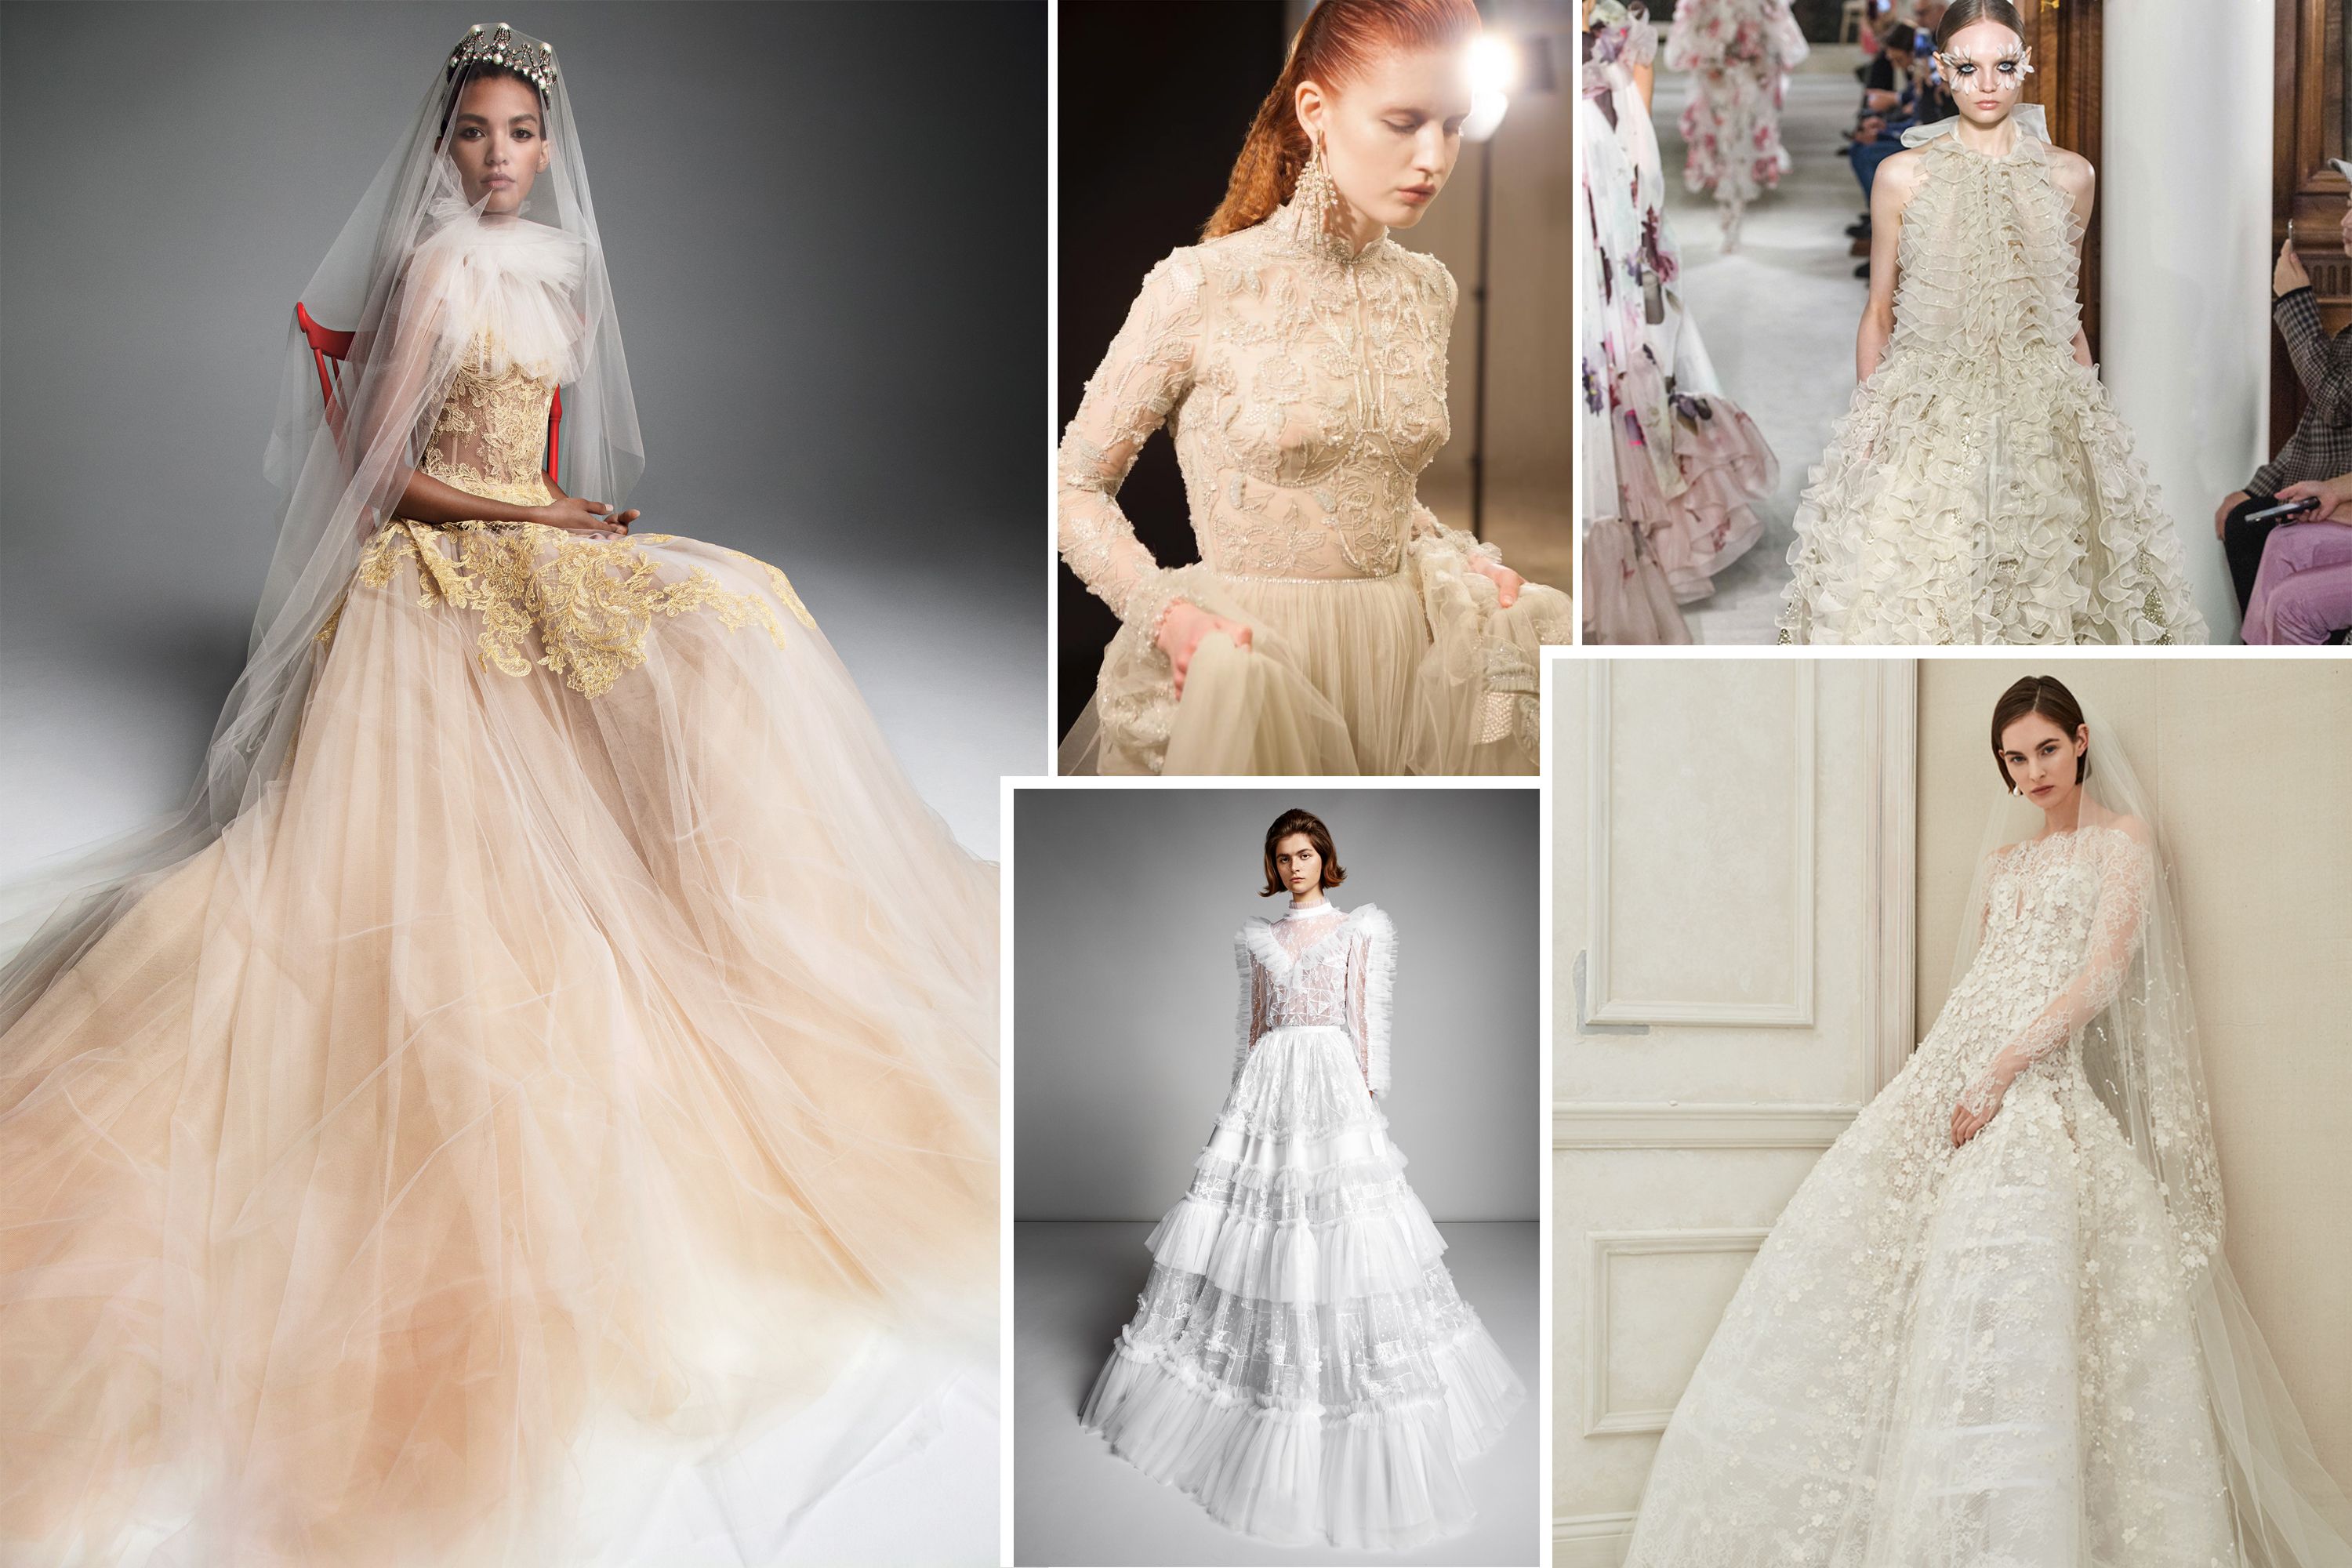 New Bridesmaid Dress Trends 2019 Lace Bridesmaid Dresses  DaVinci Bridal  Fashion Blog  DaVinci Bridal Blog